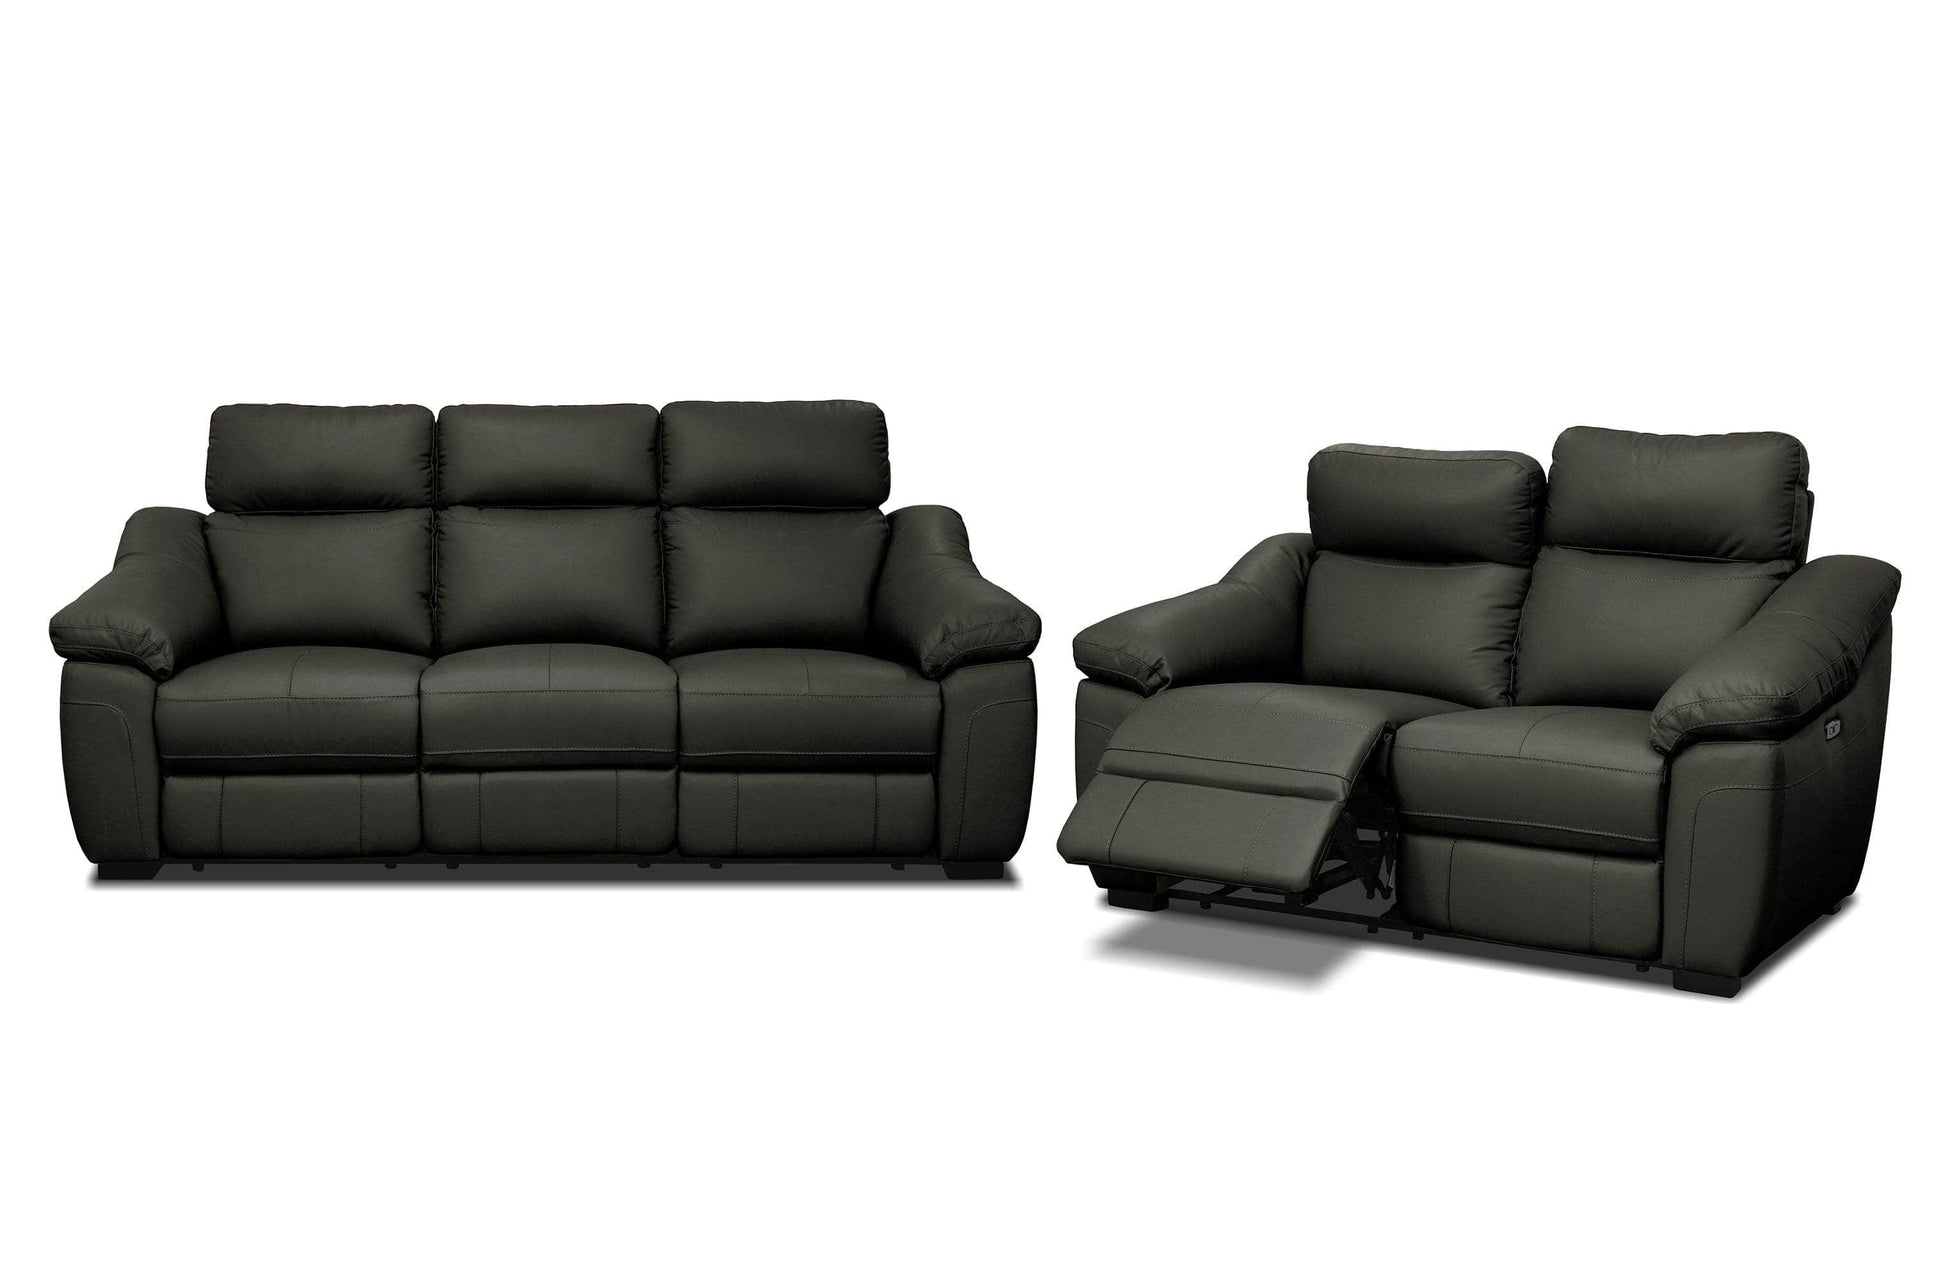 Leah 2 Seater Capri Leather - Black - Infinity Furniture